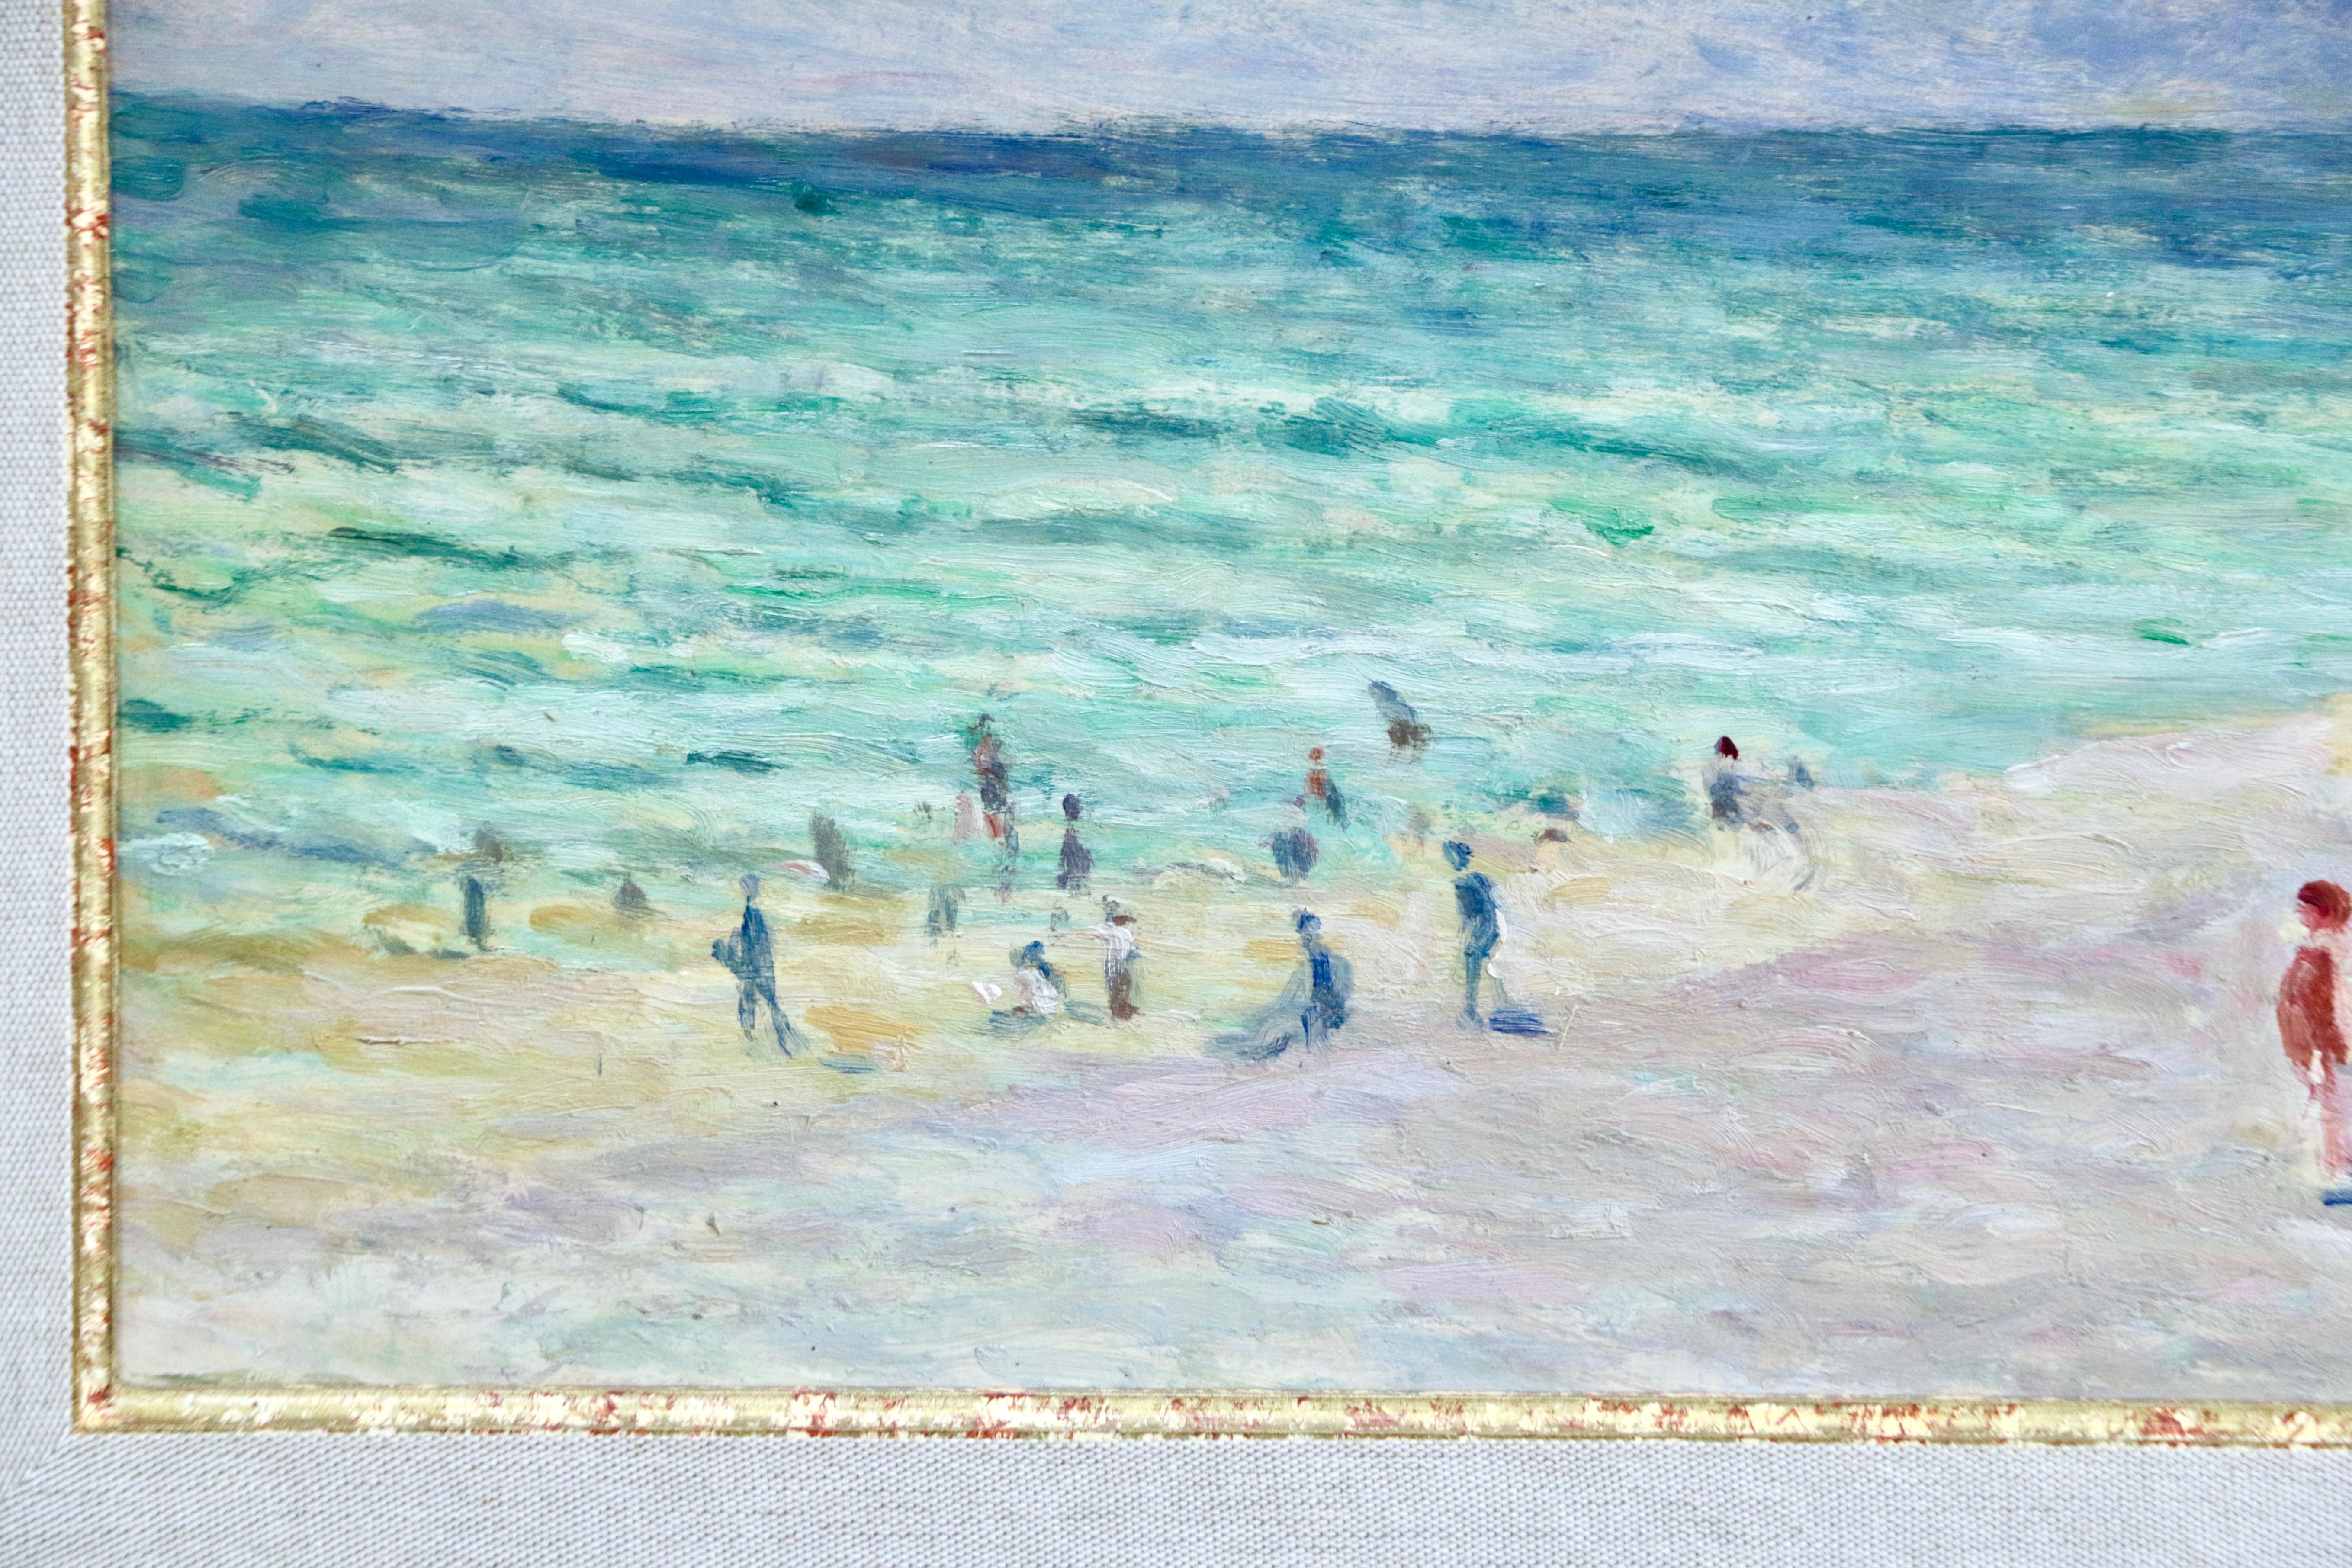 Figures on Beach - Treport - 20th Century Oil, Coastal Landscape by M Luce - Gray Landscape Painting by Maximilien Luce